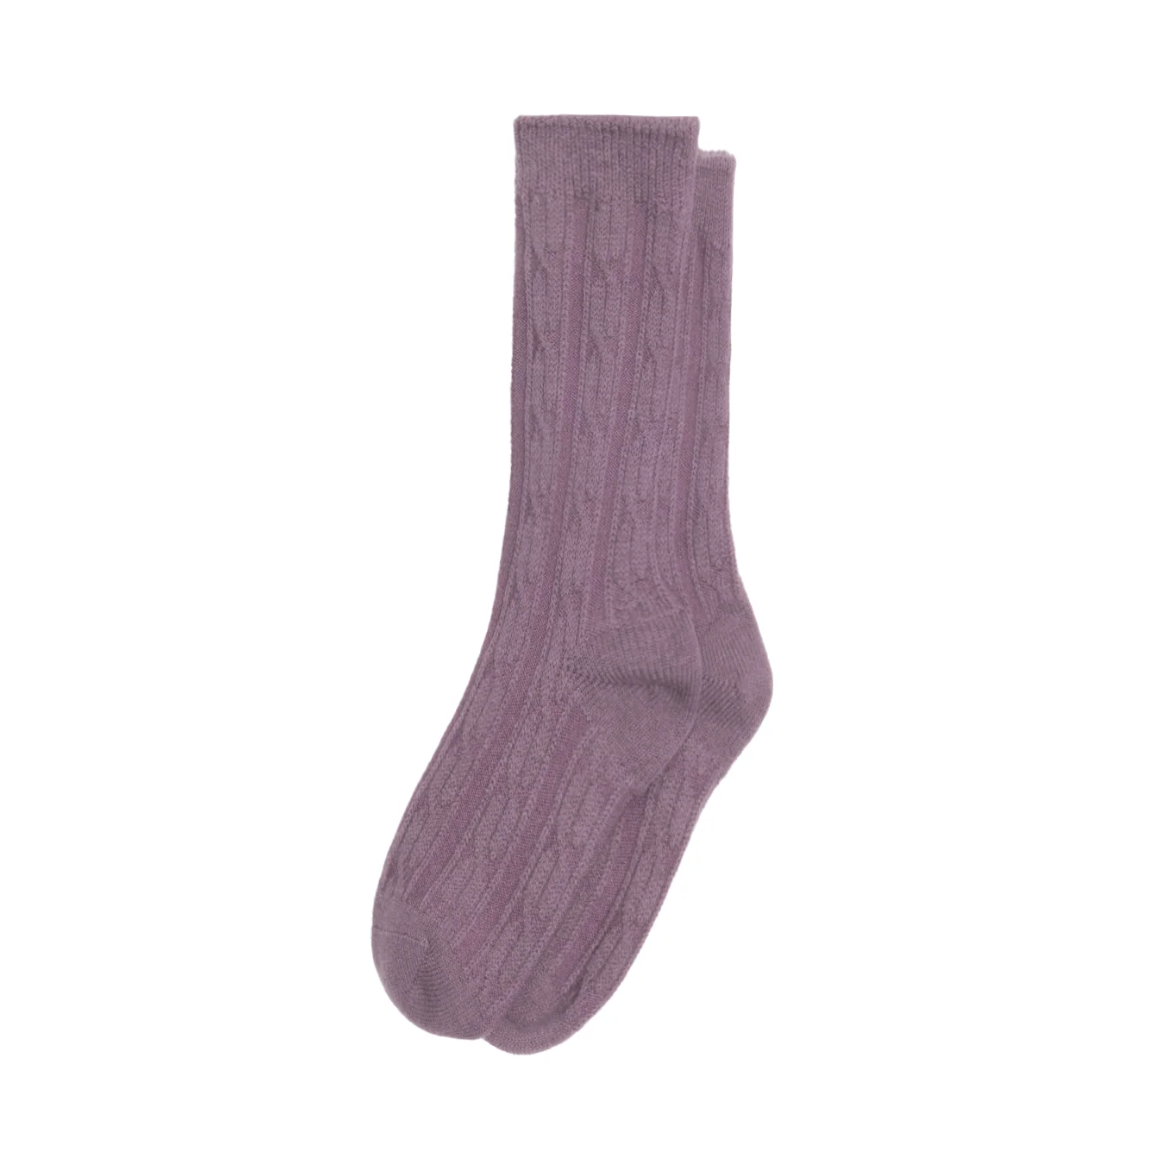 Stussy Cable Knit 'S' Dress Socks - Plumb